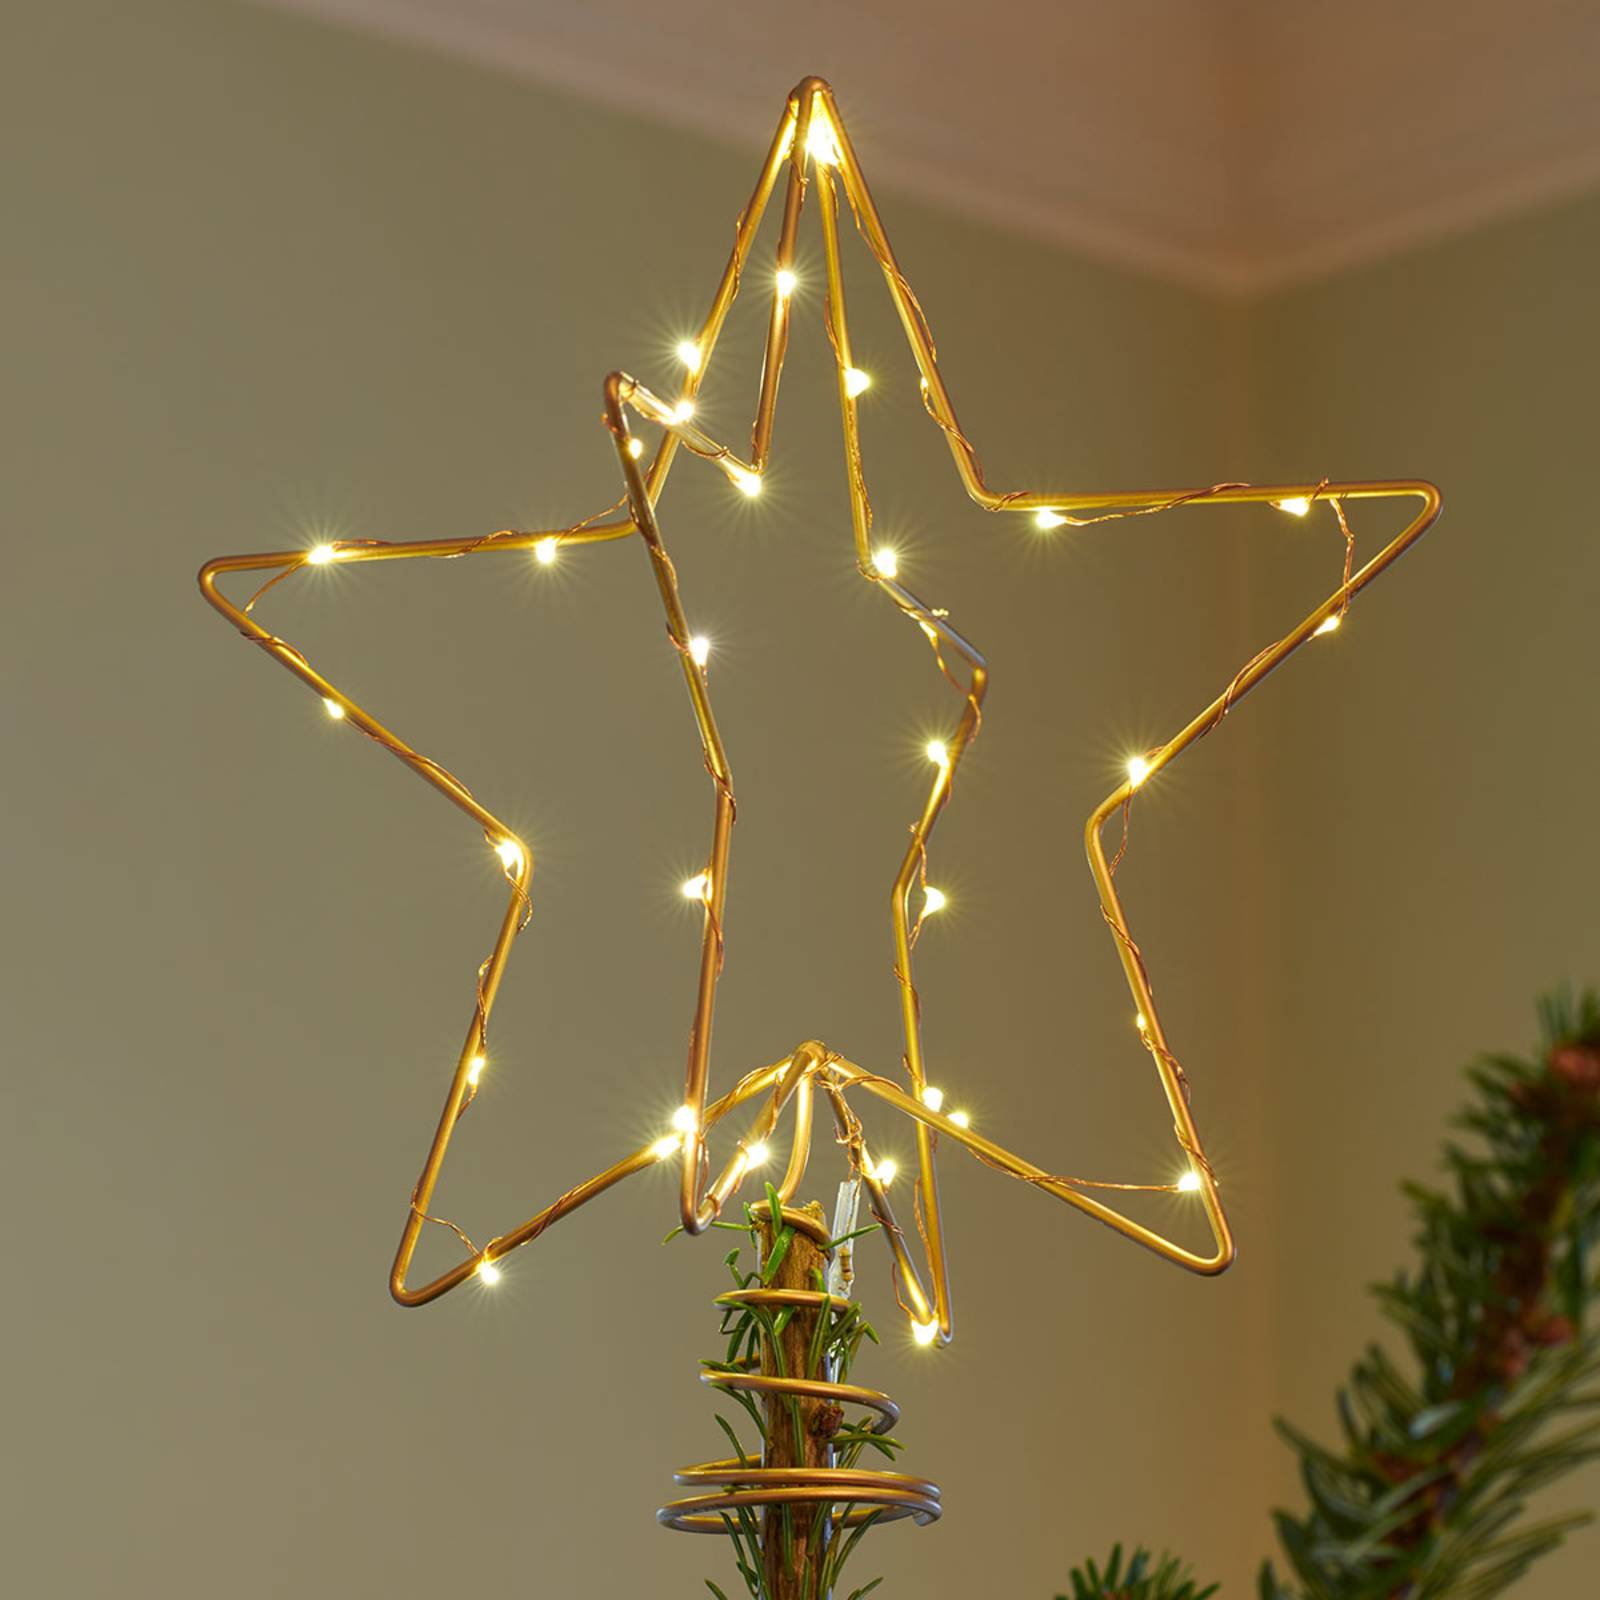 Christina Gold világító LED karácsonyfa csúcsdísz, magasság 25 cm - Sirius